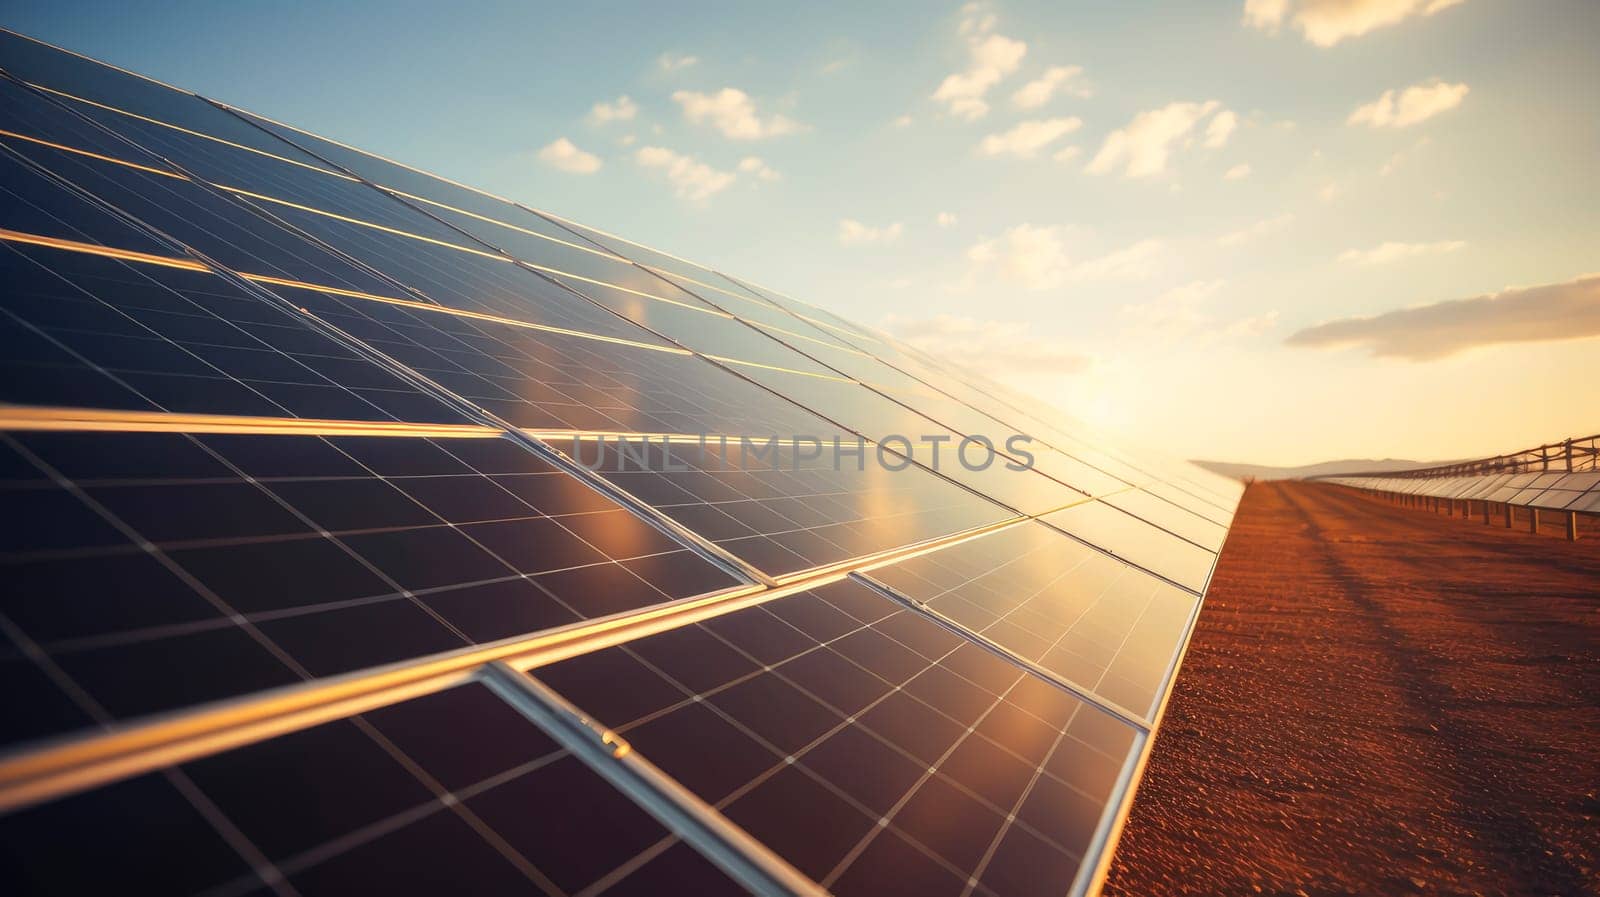 Solar panels outdoors, in production by Alla_Yurtayeva